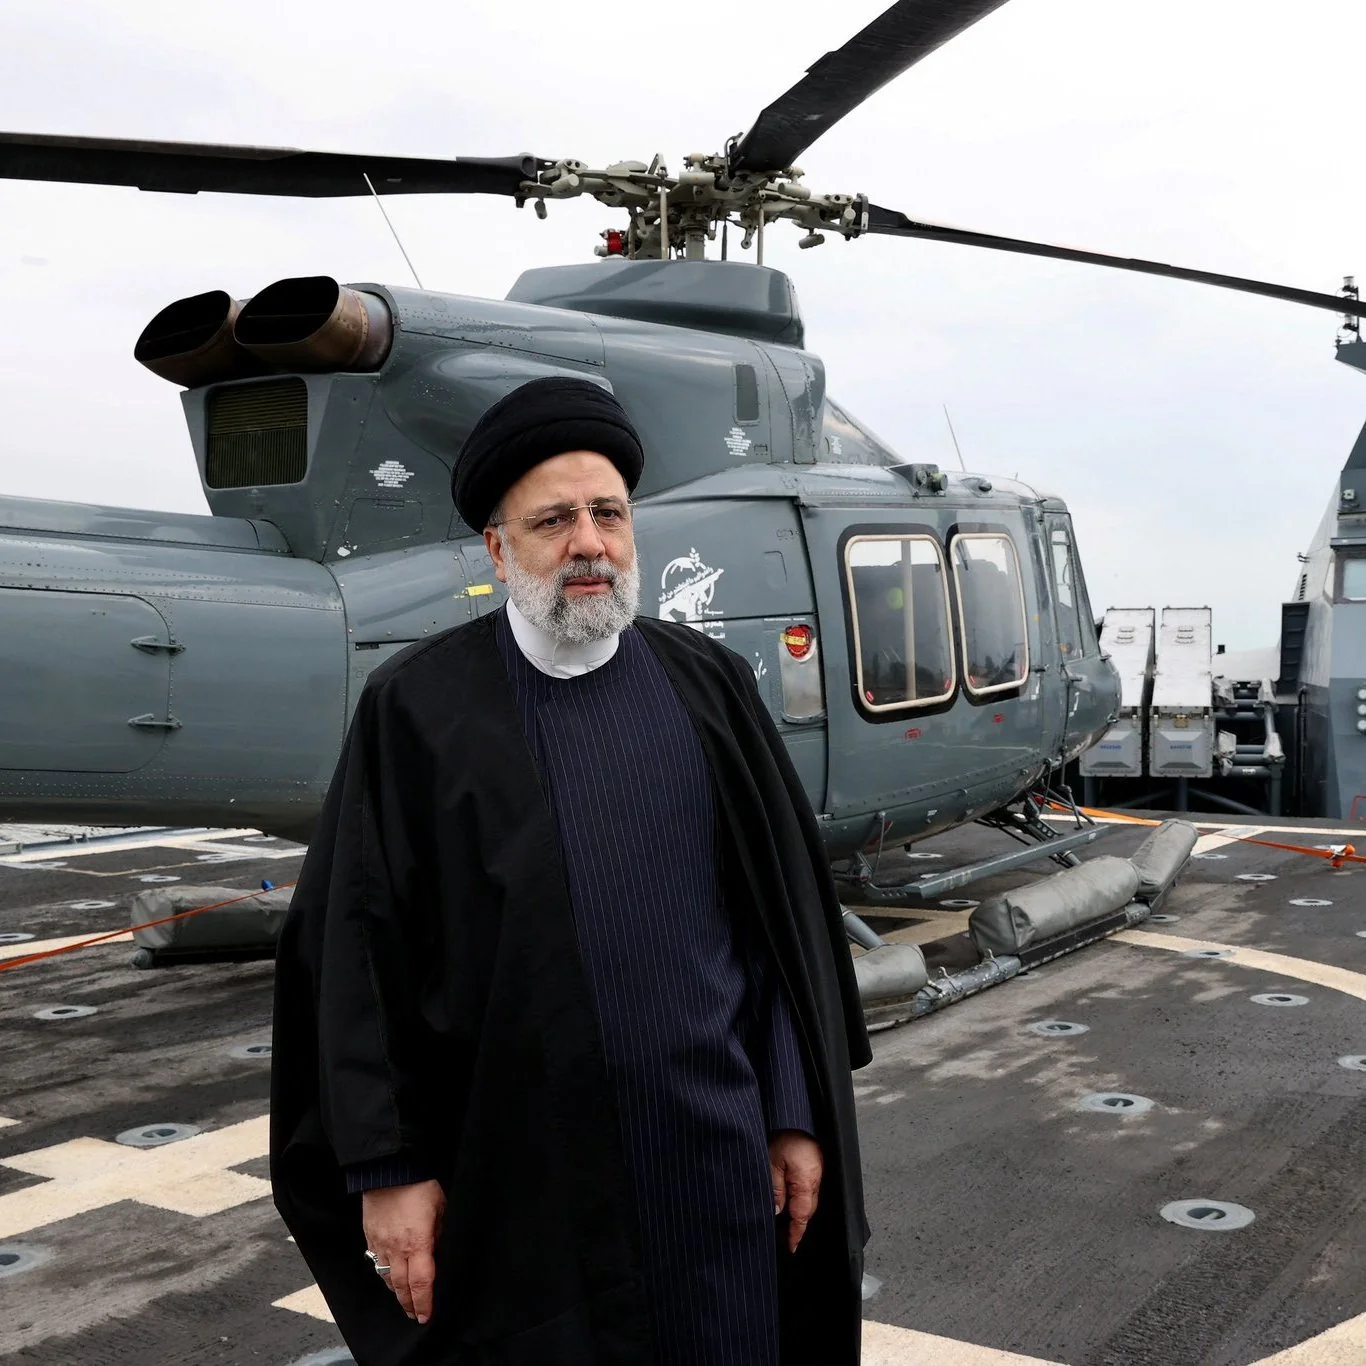 Aksidentohet helikopteri  zhduket presidenti iranian